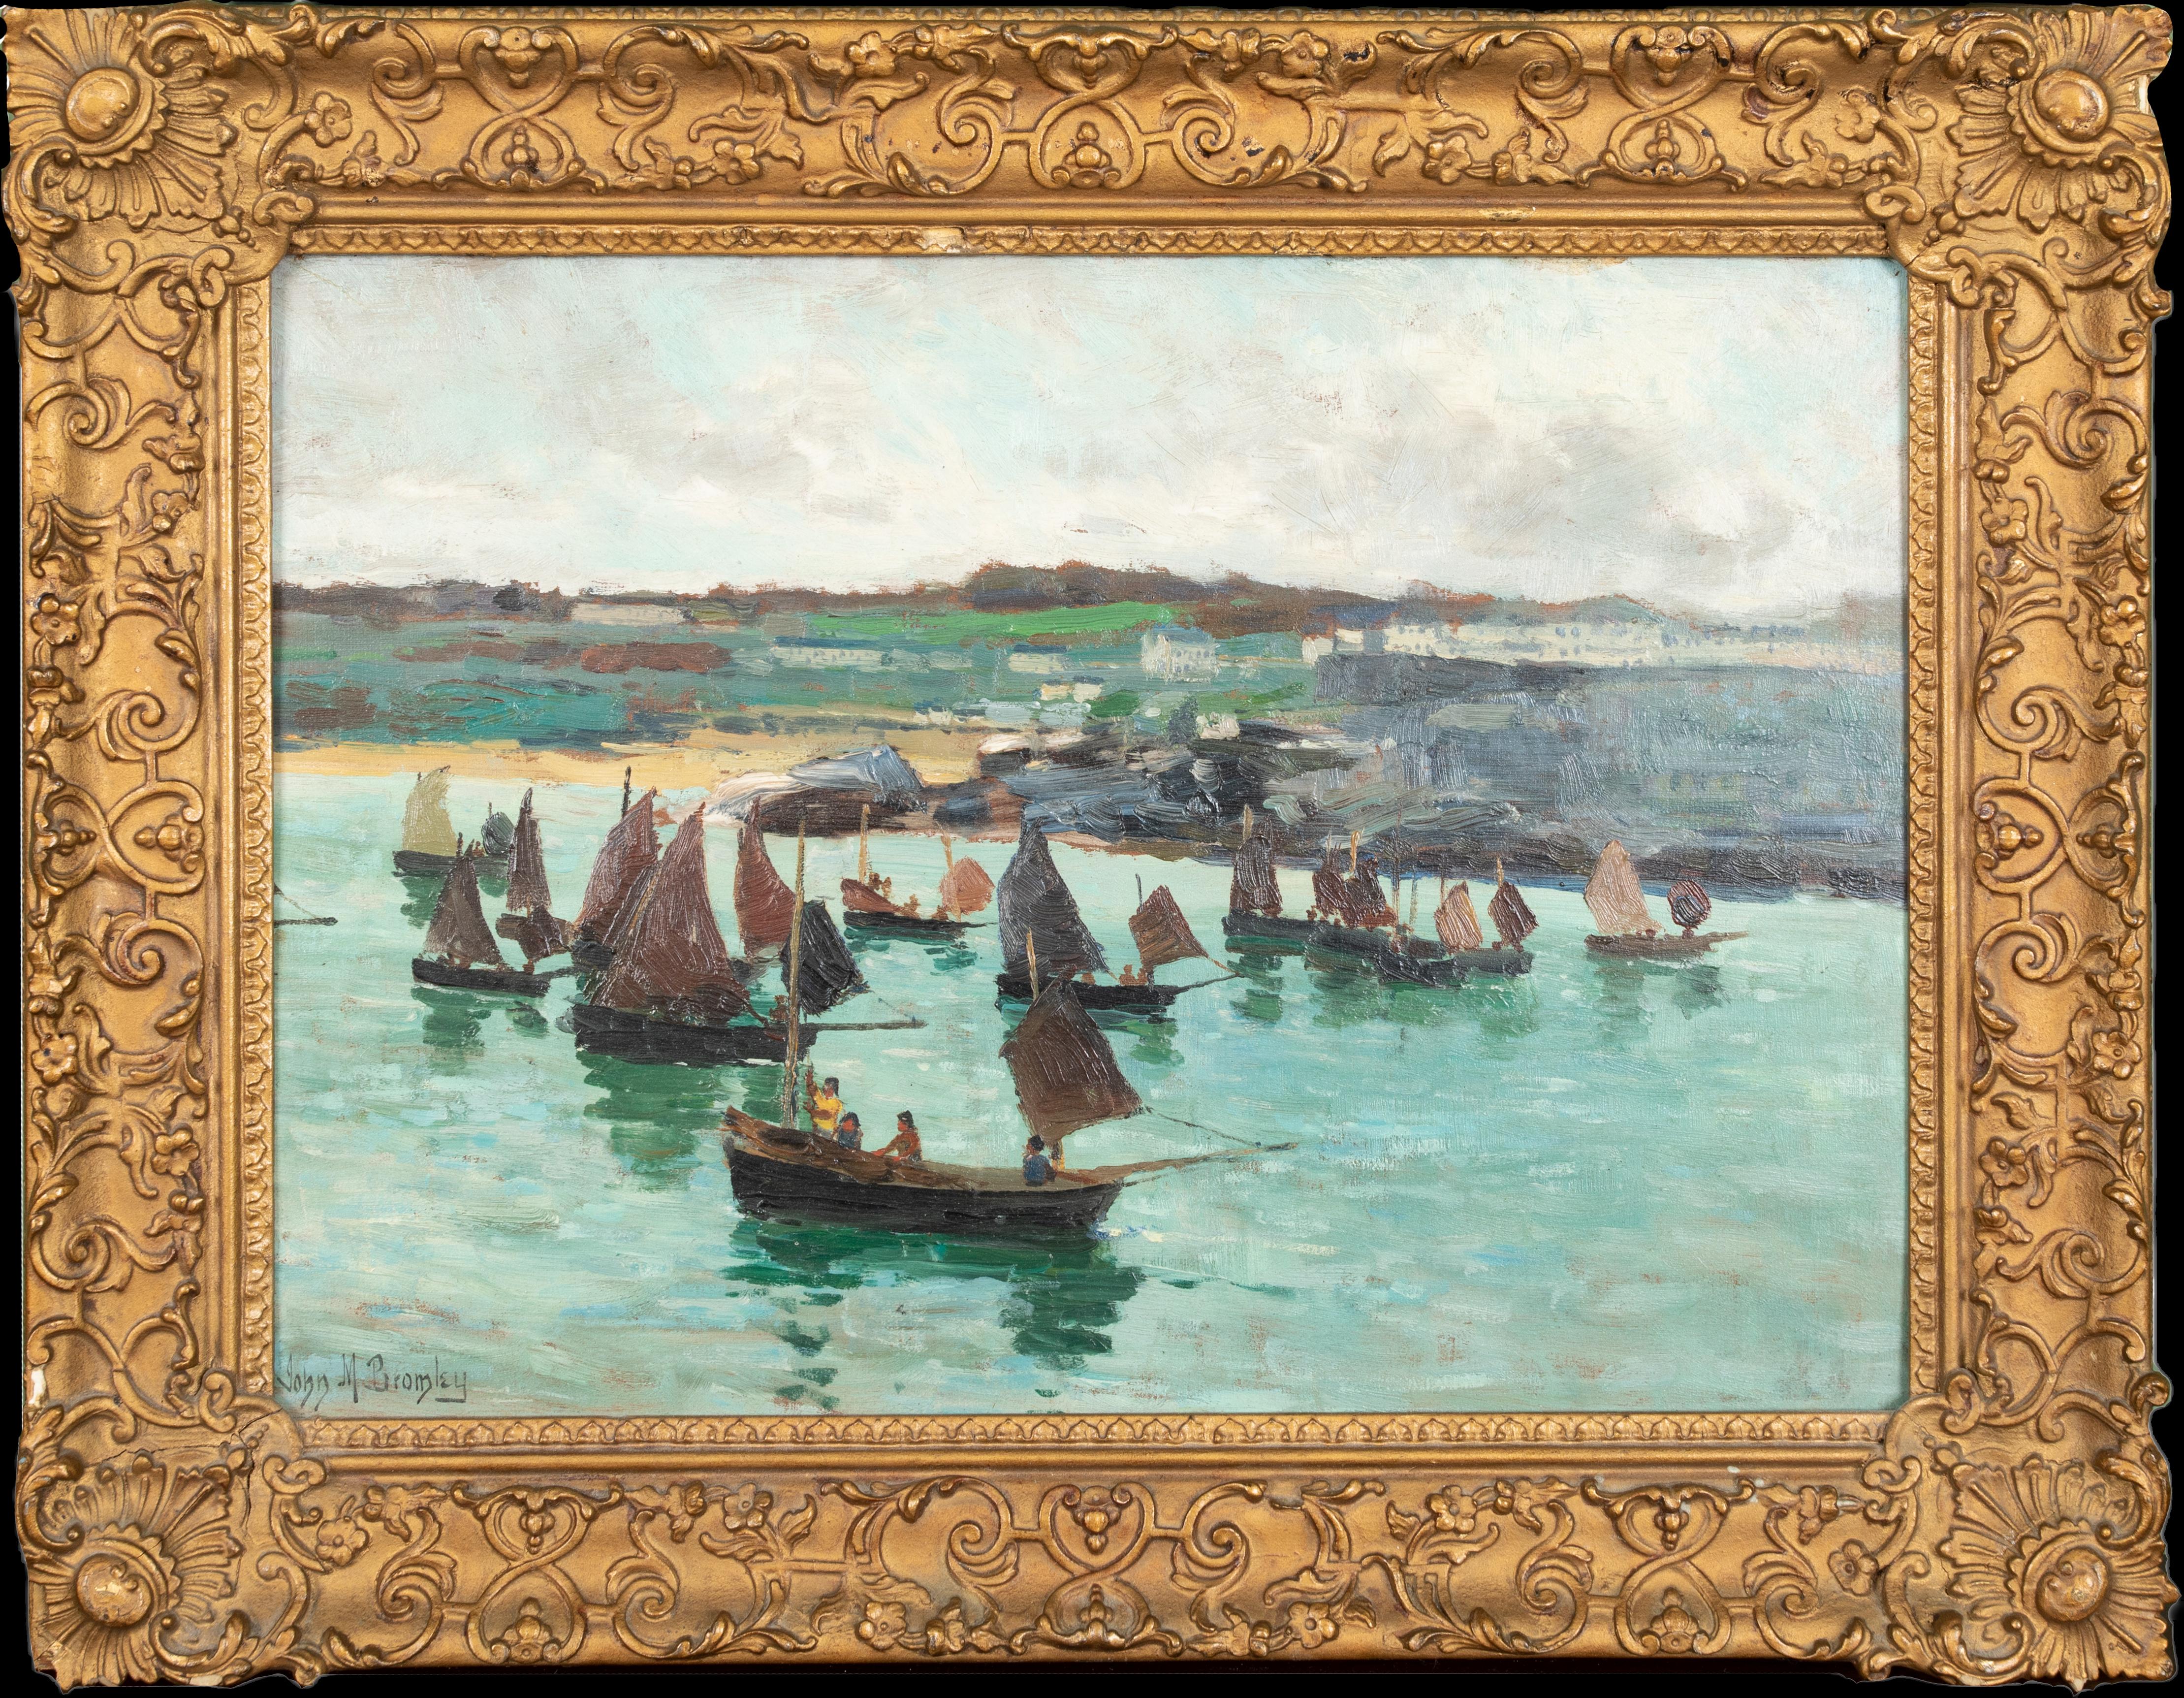 John Mallord Bromley Portrait Painting - The Fishing Fleet Off Pedn Olva, circa 1900  by John Mallard BROMLEY (1858-1939)